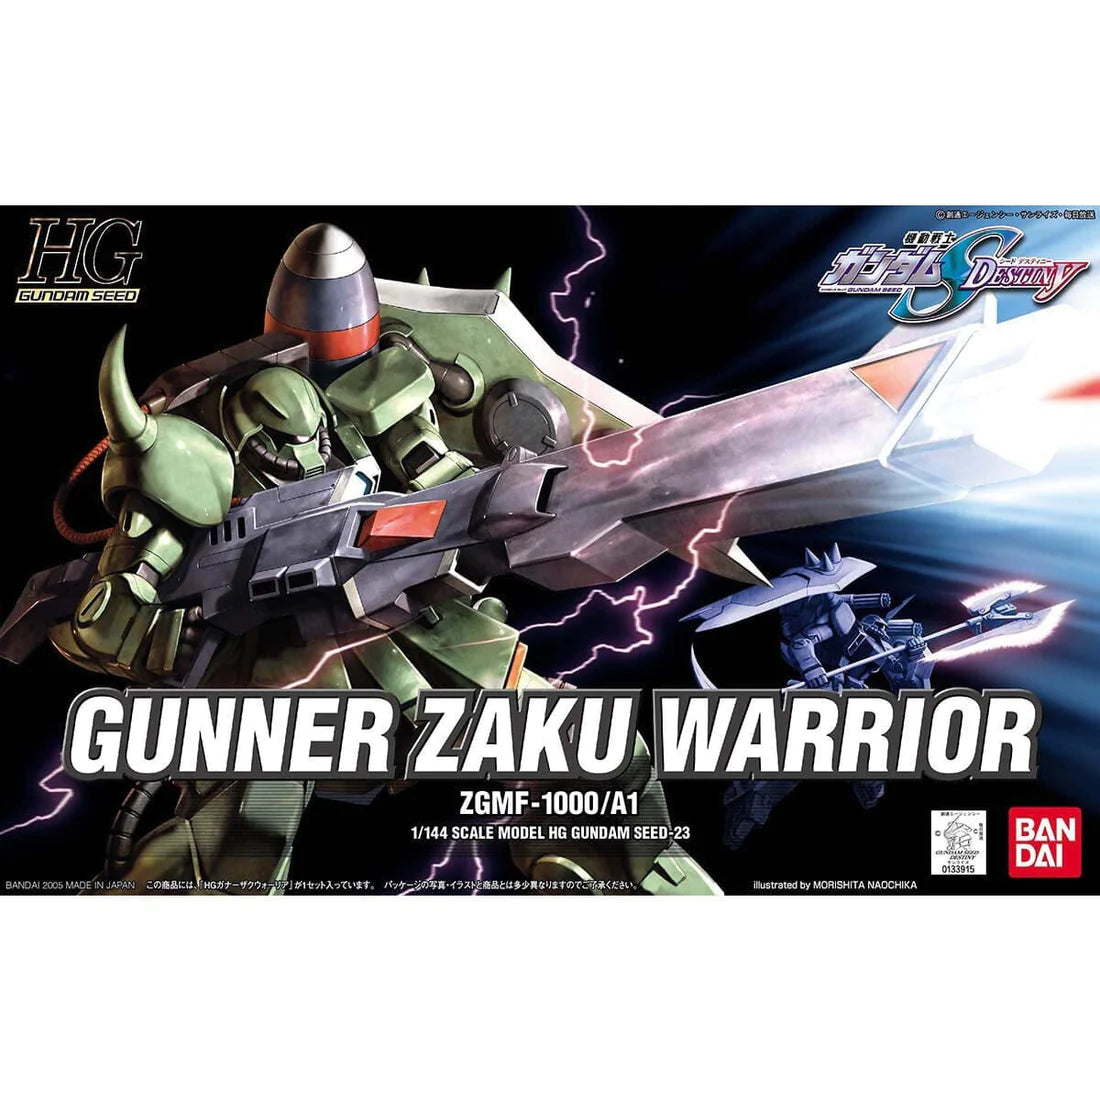 HGGS 1/144 #23 Gunner Zaku Warrior